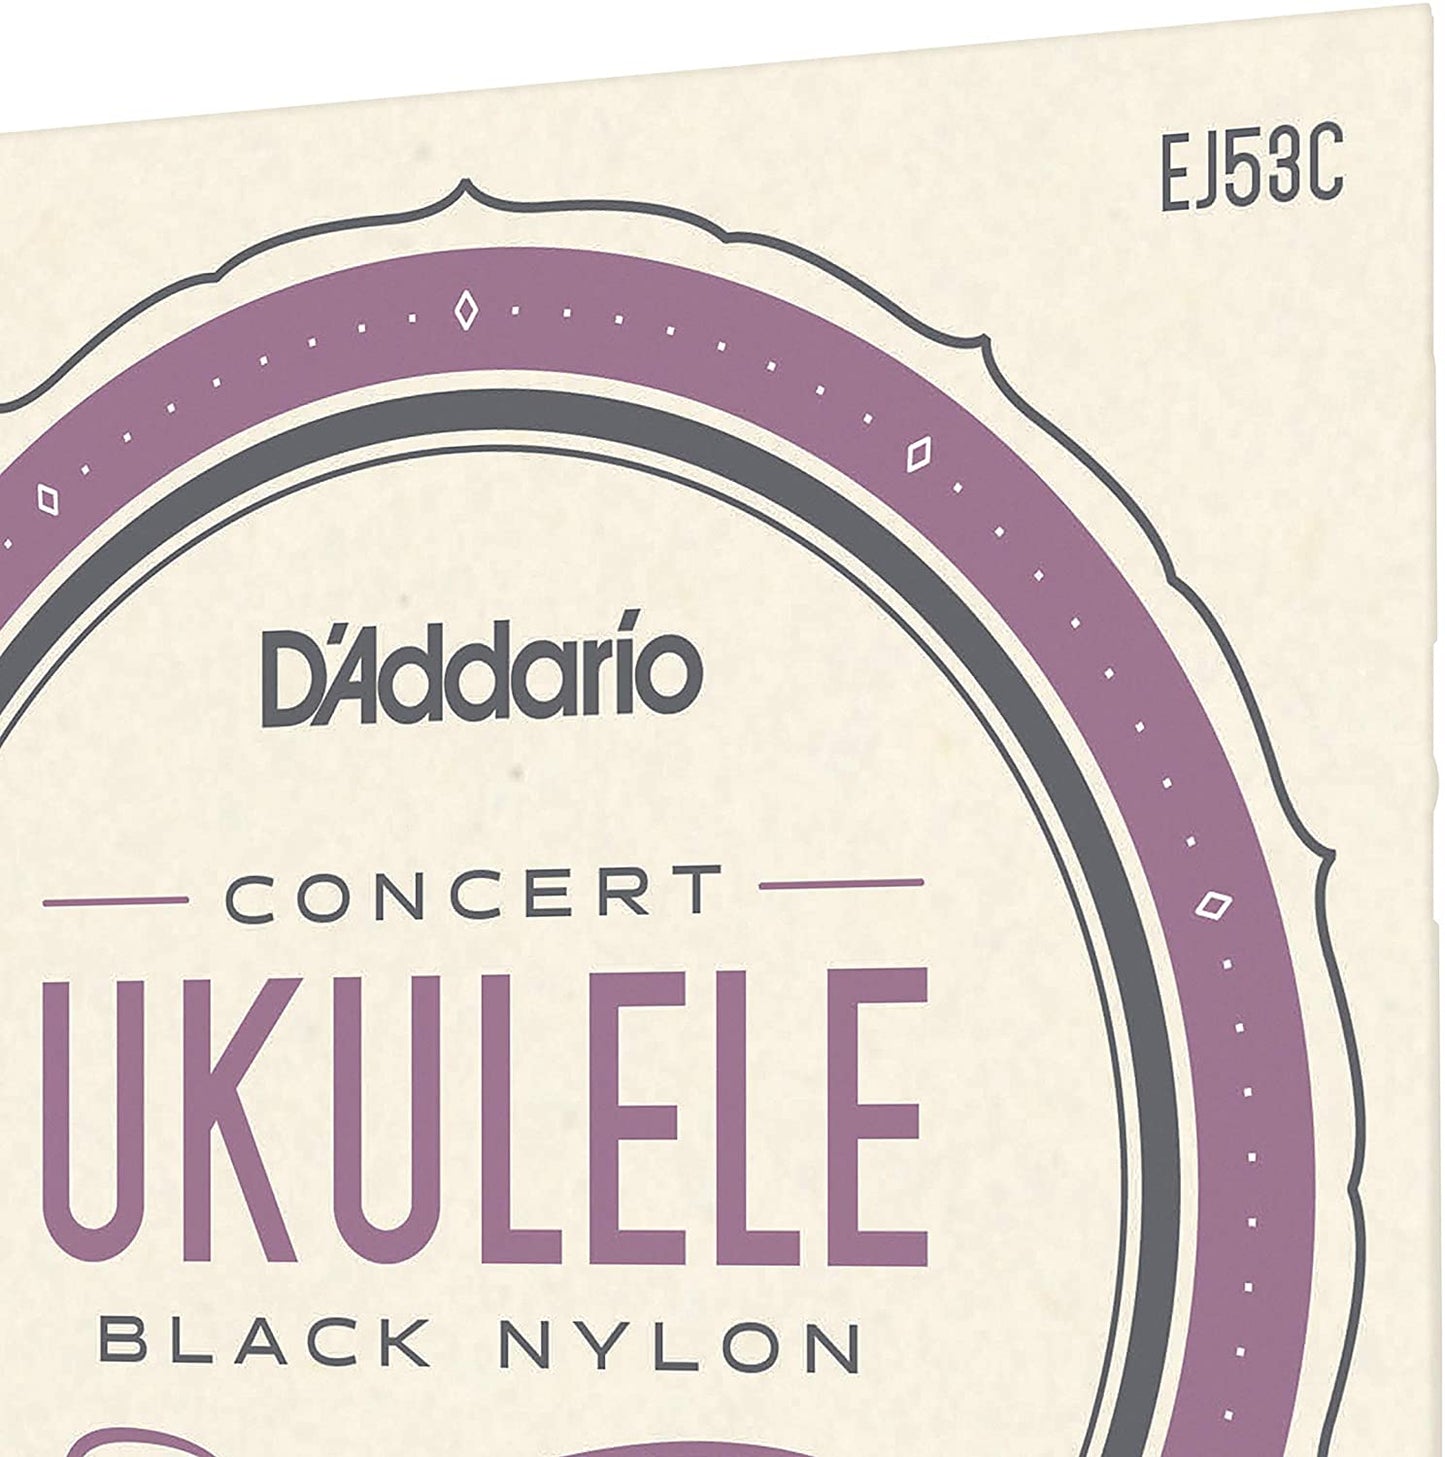 D'Addario Pro Arte Rectified Black Nylon Ukulele Strings with Dark Deep Tones (Hawaiian Concert, Soprano), (EJ53C, EJ53S) for Musicians and Singers